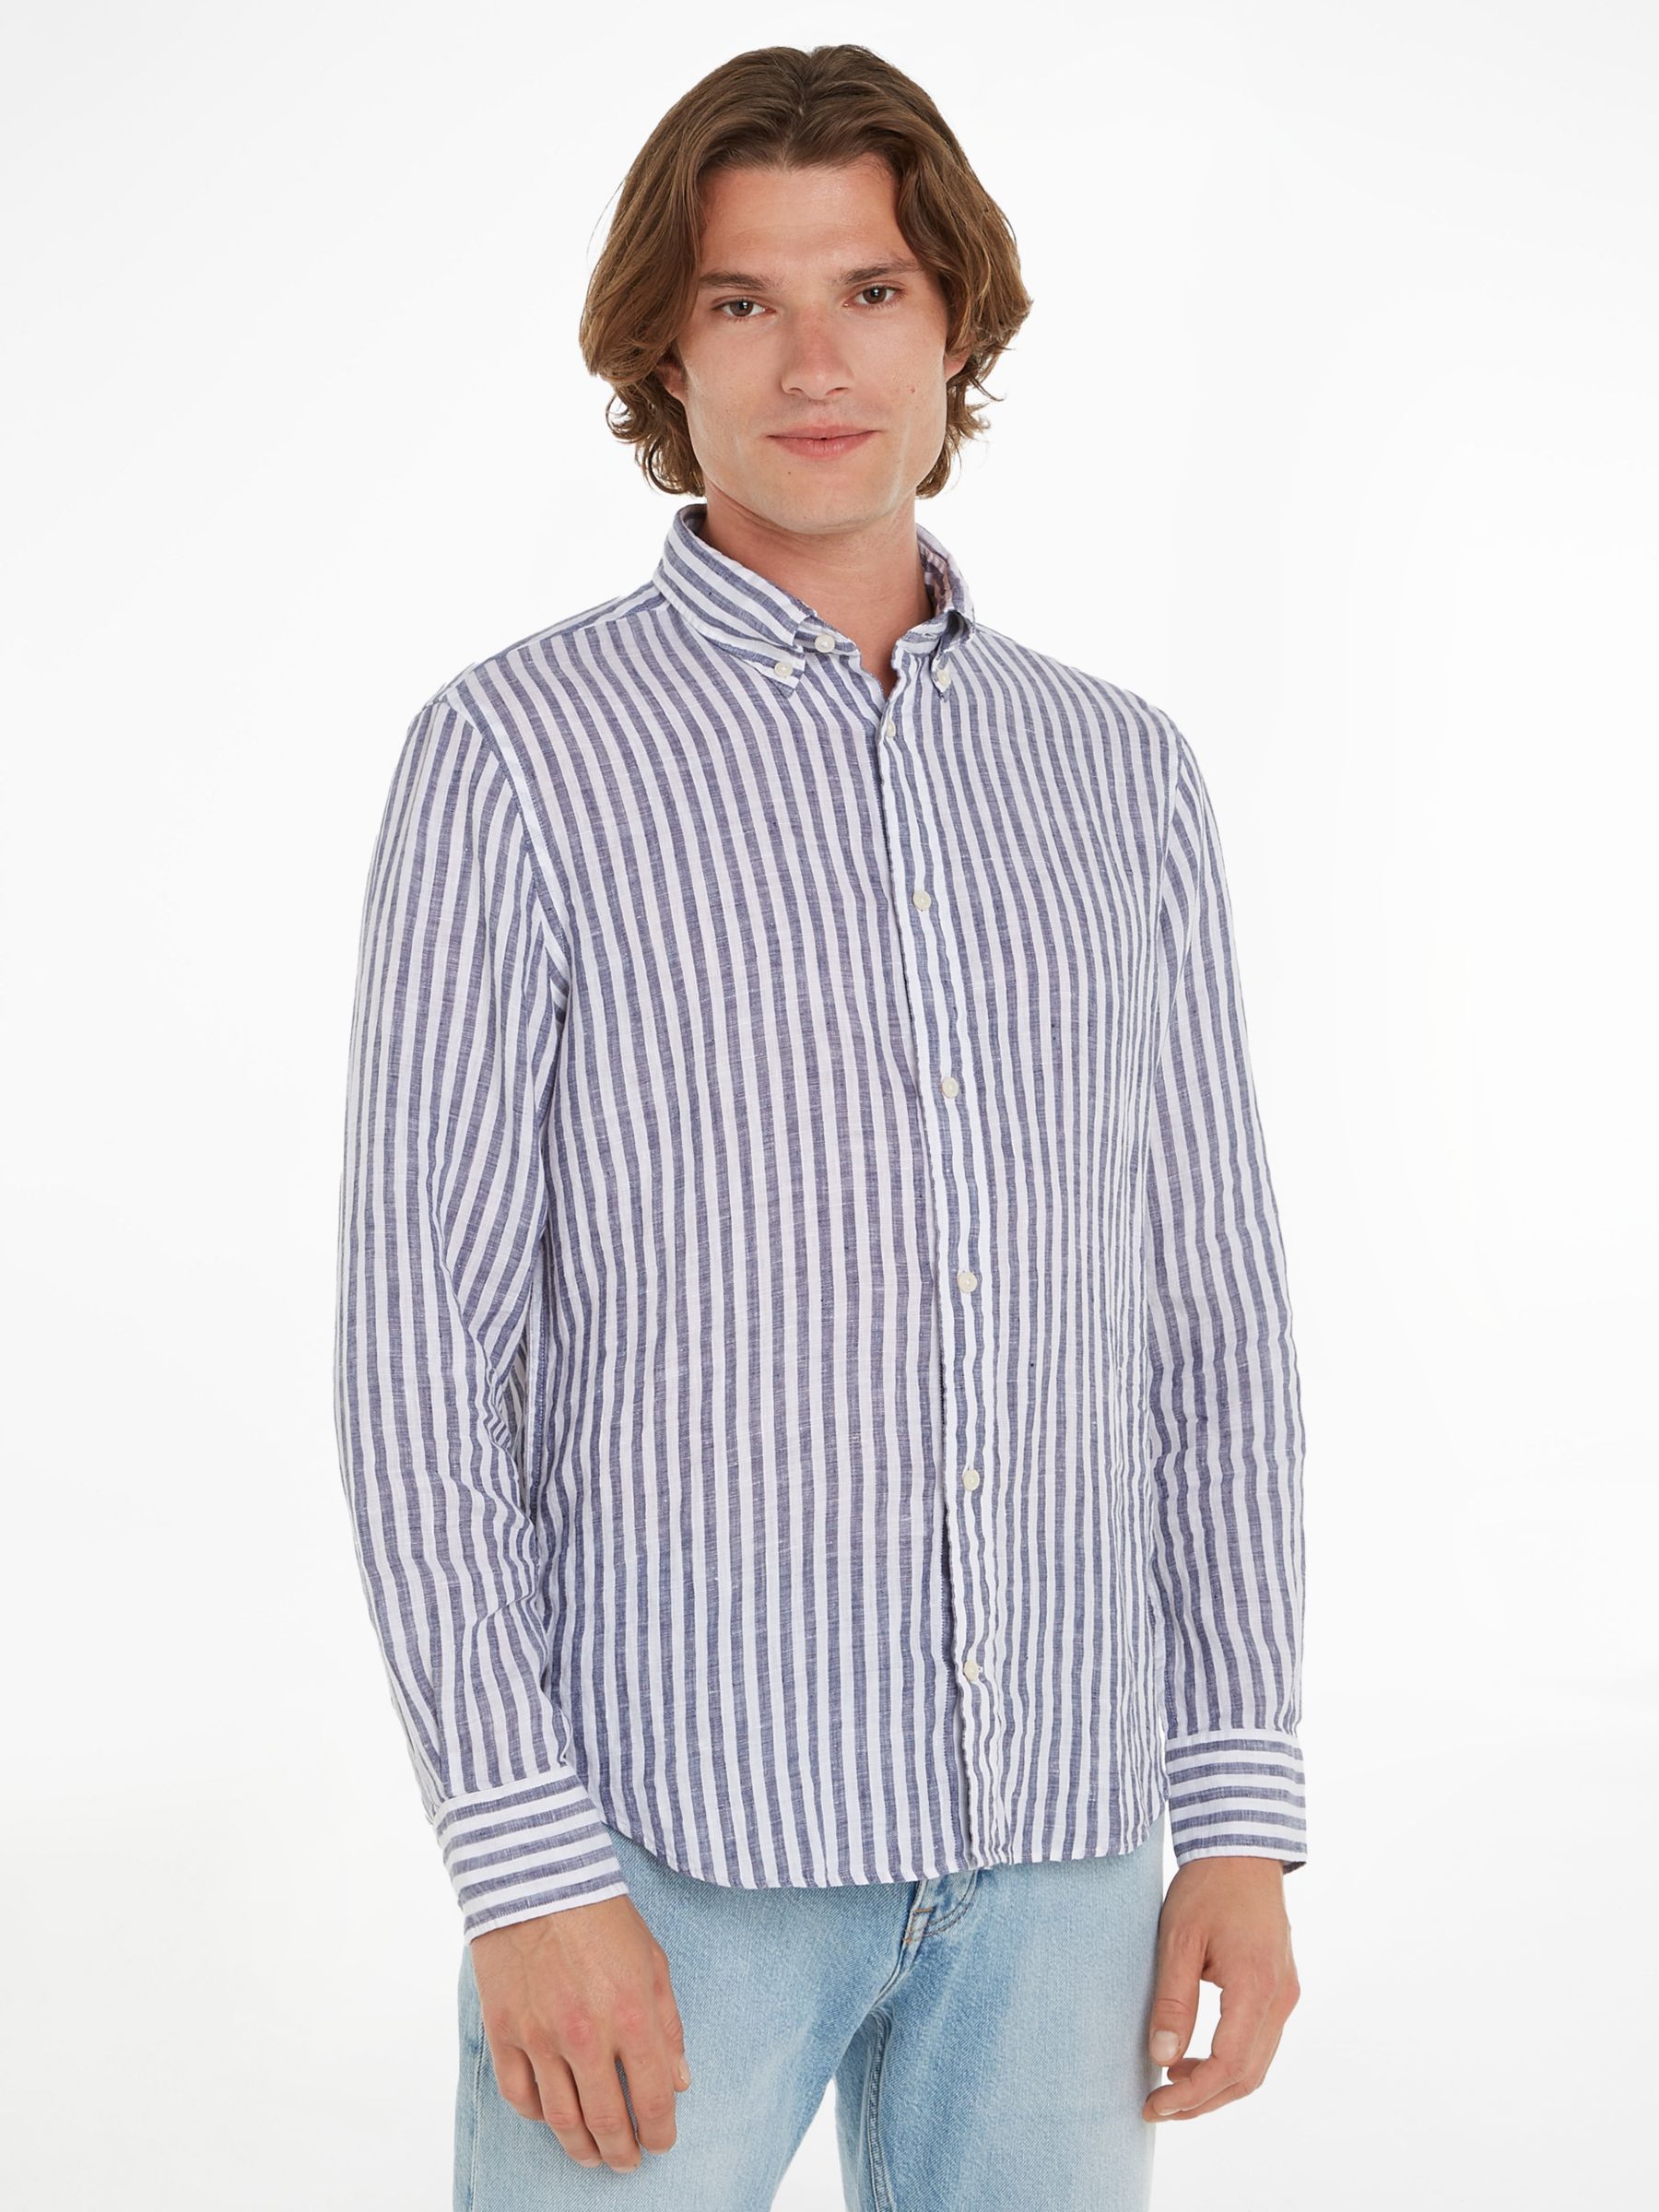 Tommy Hilfiger Linen Stripe Shirt, Dark Navy/White at John Lewis & Partners